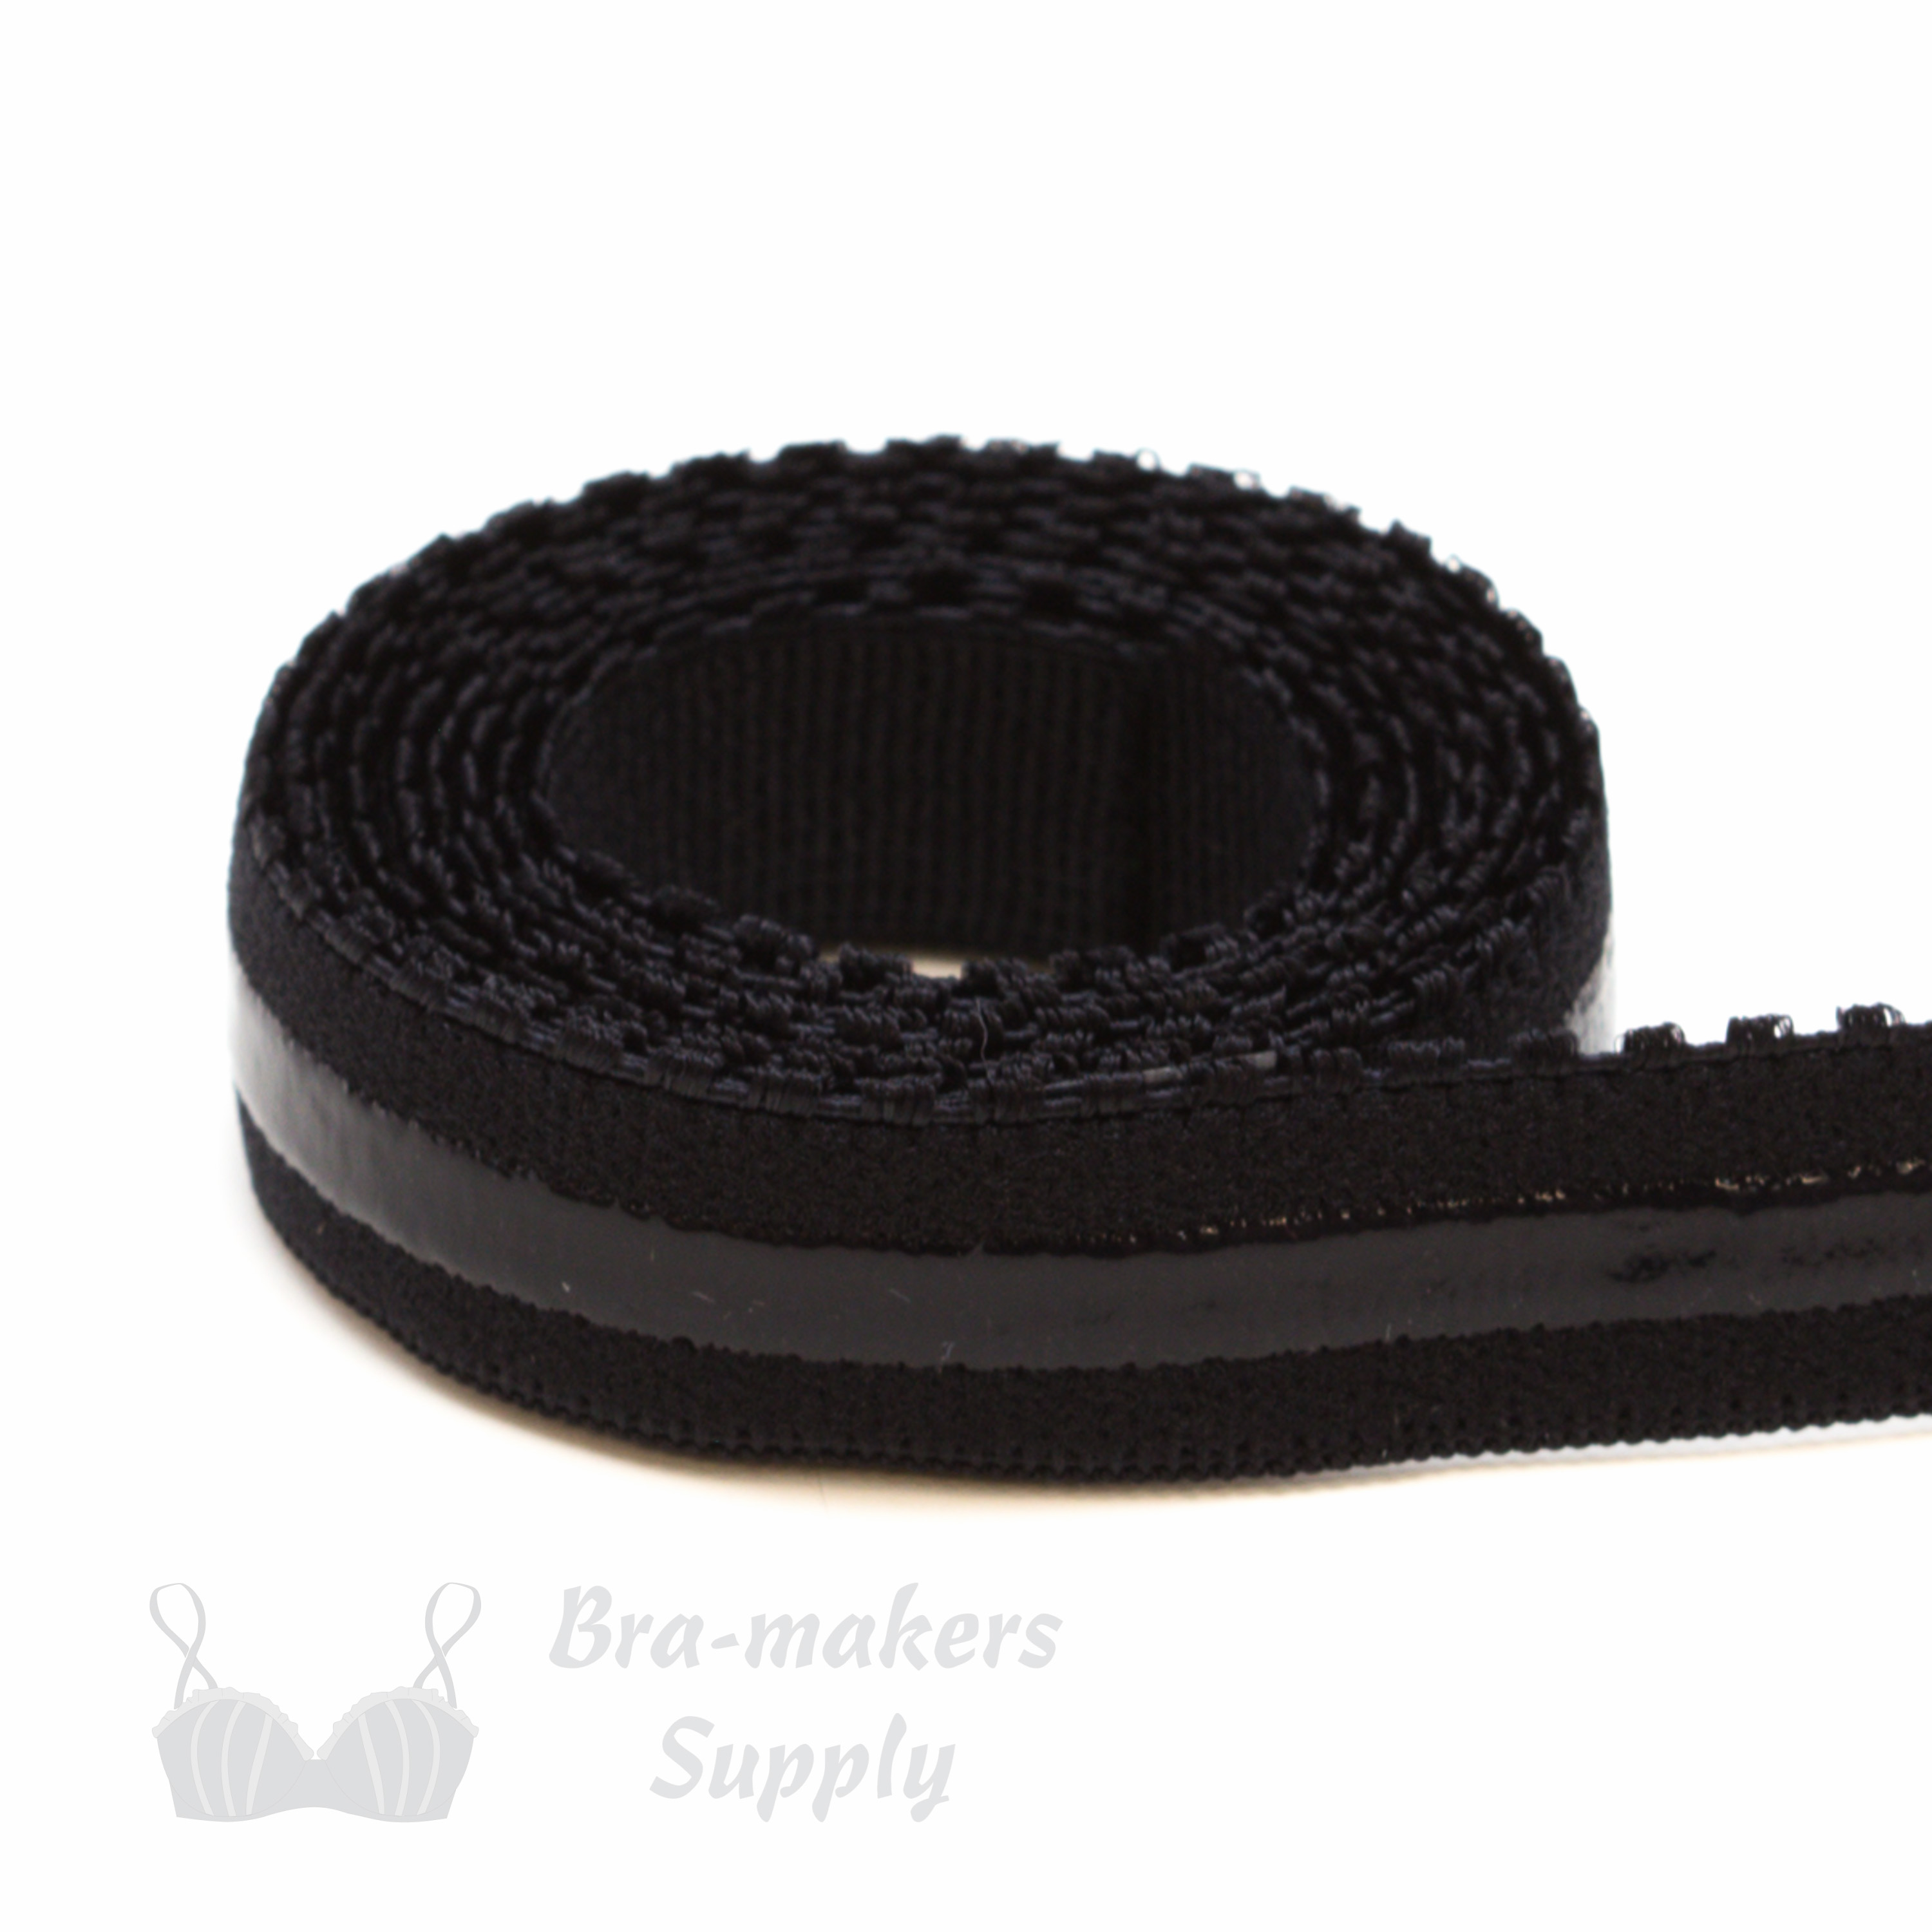 https://www.braandcorsetsupplies.com/wp-content/uploads/2016/07/half-inch-or-12-mm-silicone-gripper-elastic-EG-4-black-from-Bra-Makers-Supply-1-metre-roll-shown.jpg